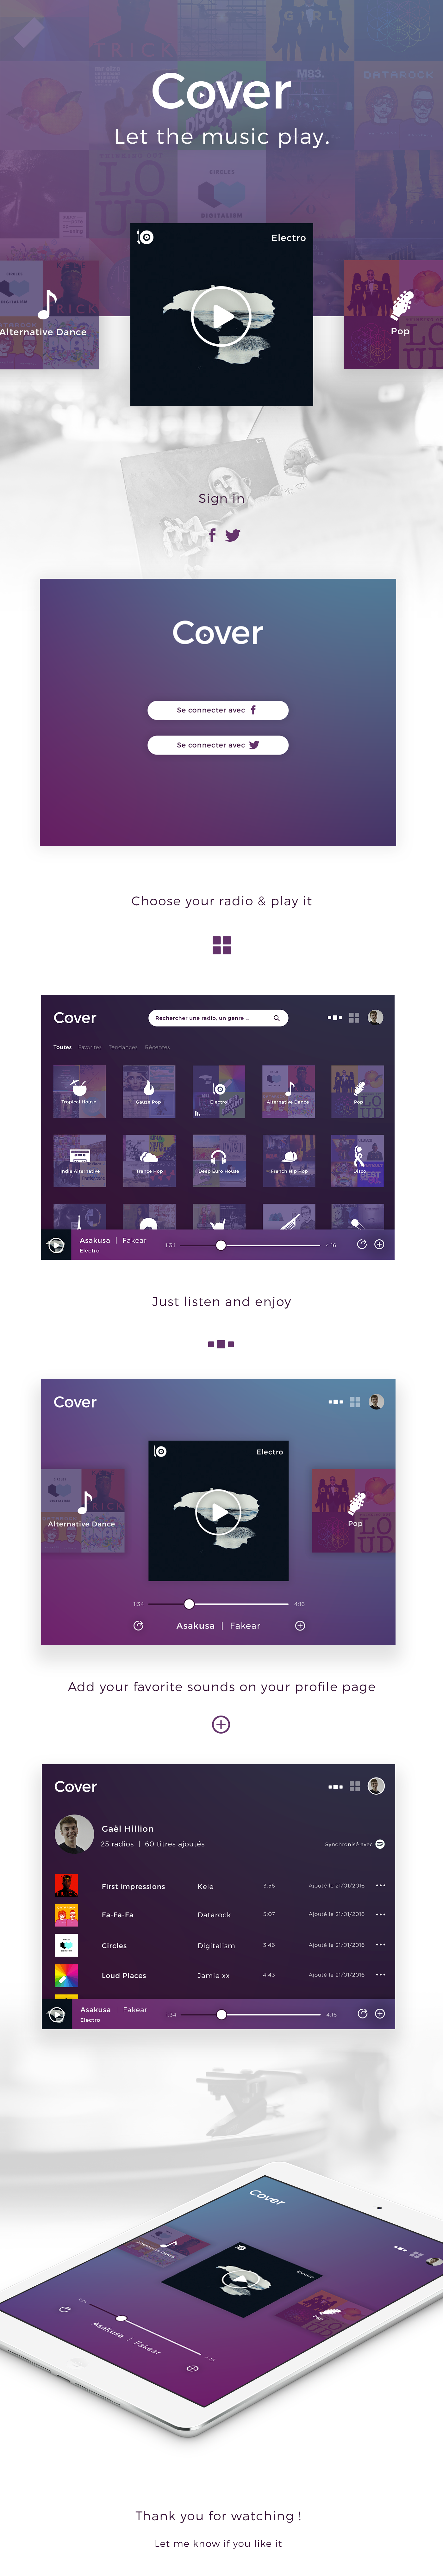 ux UI Interface Radio Web play graphism design concept Album spotify